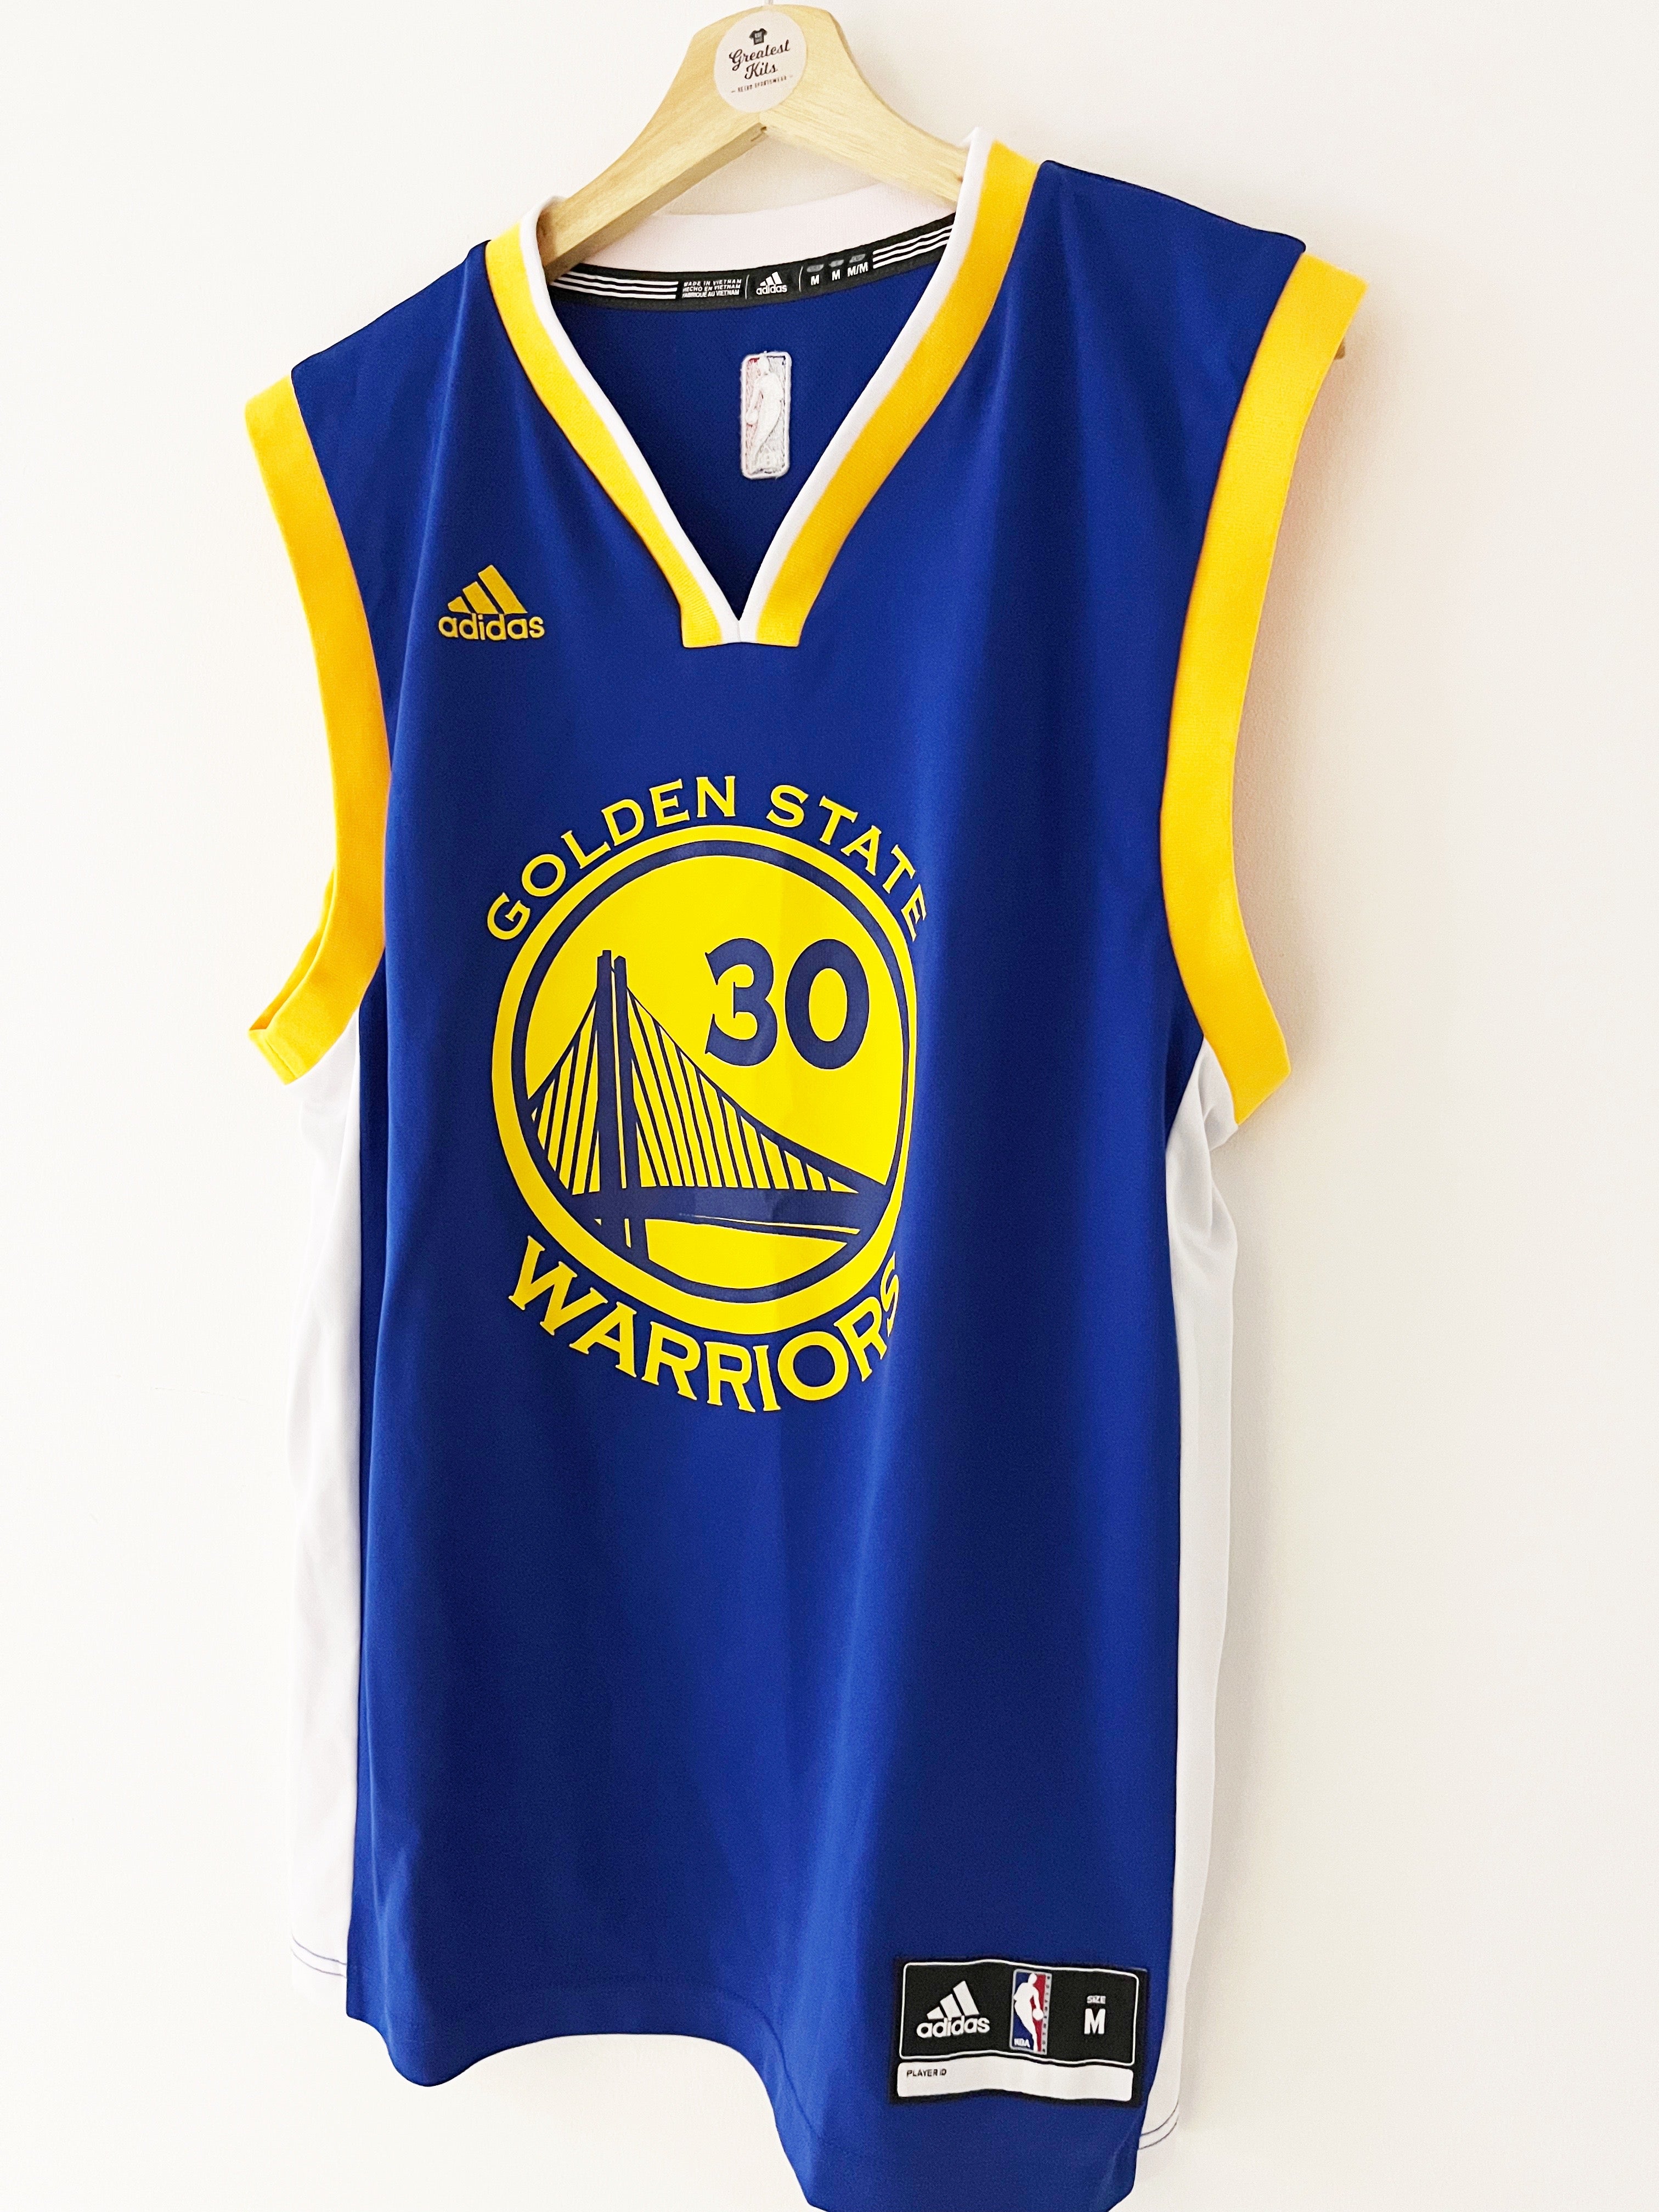 2014-17 Golden State Warriors Adidas camiseta de carretera Curry # 30 (M) 9/10